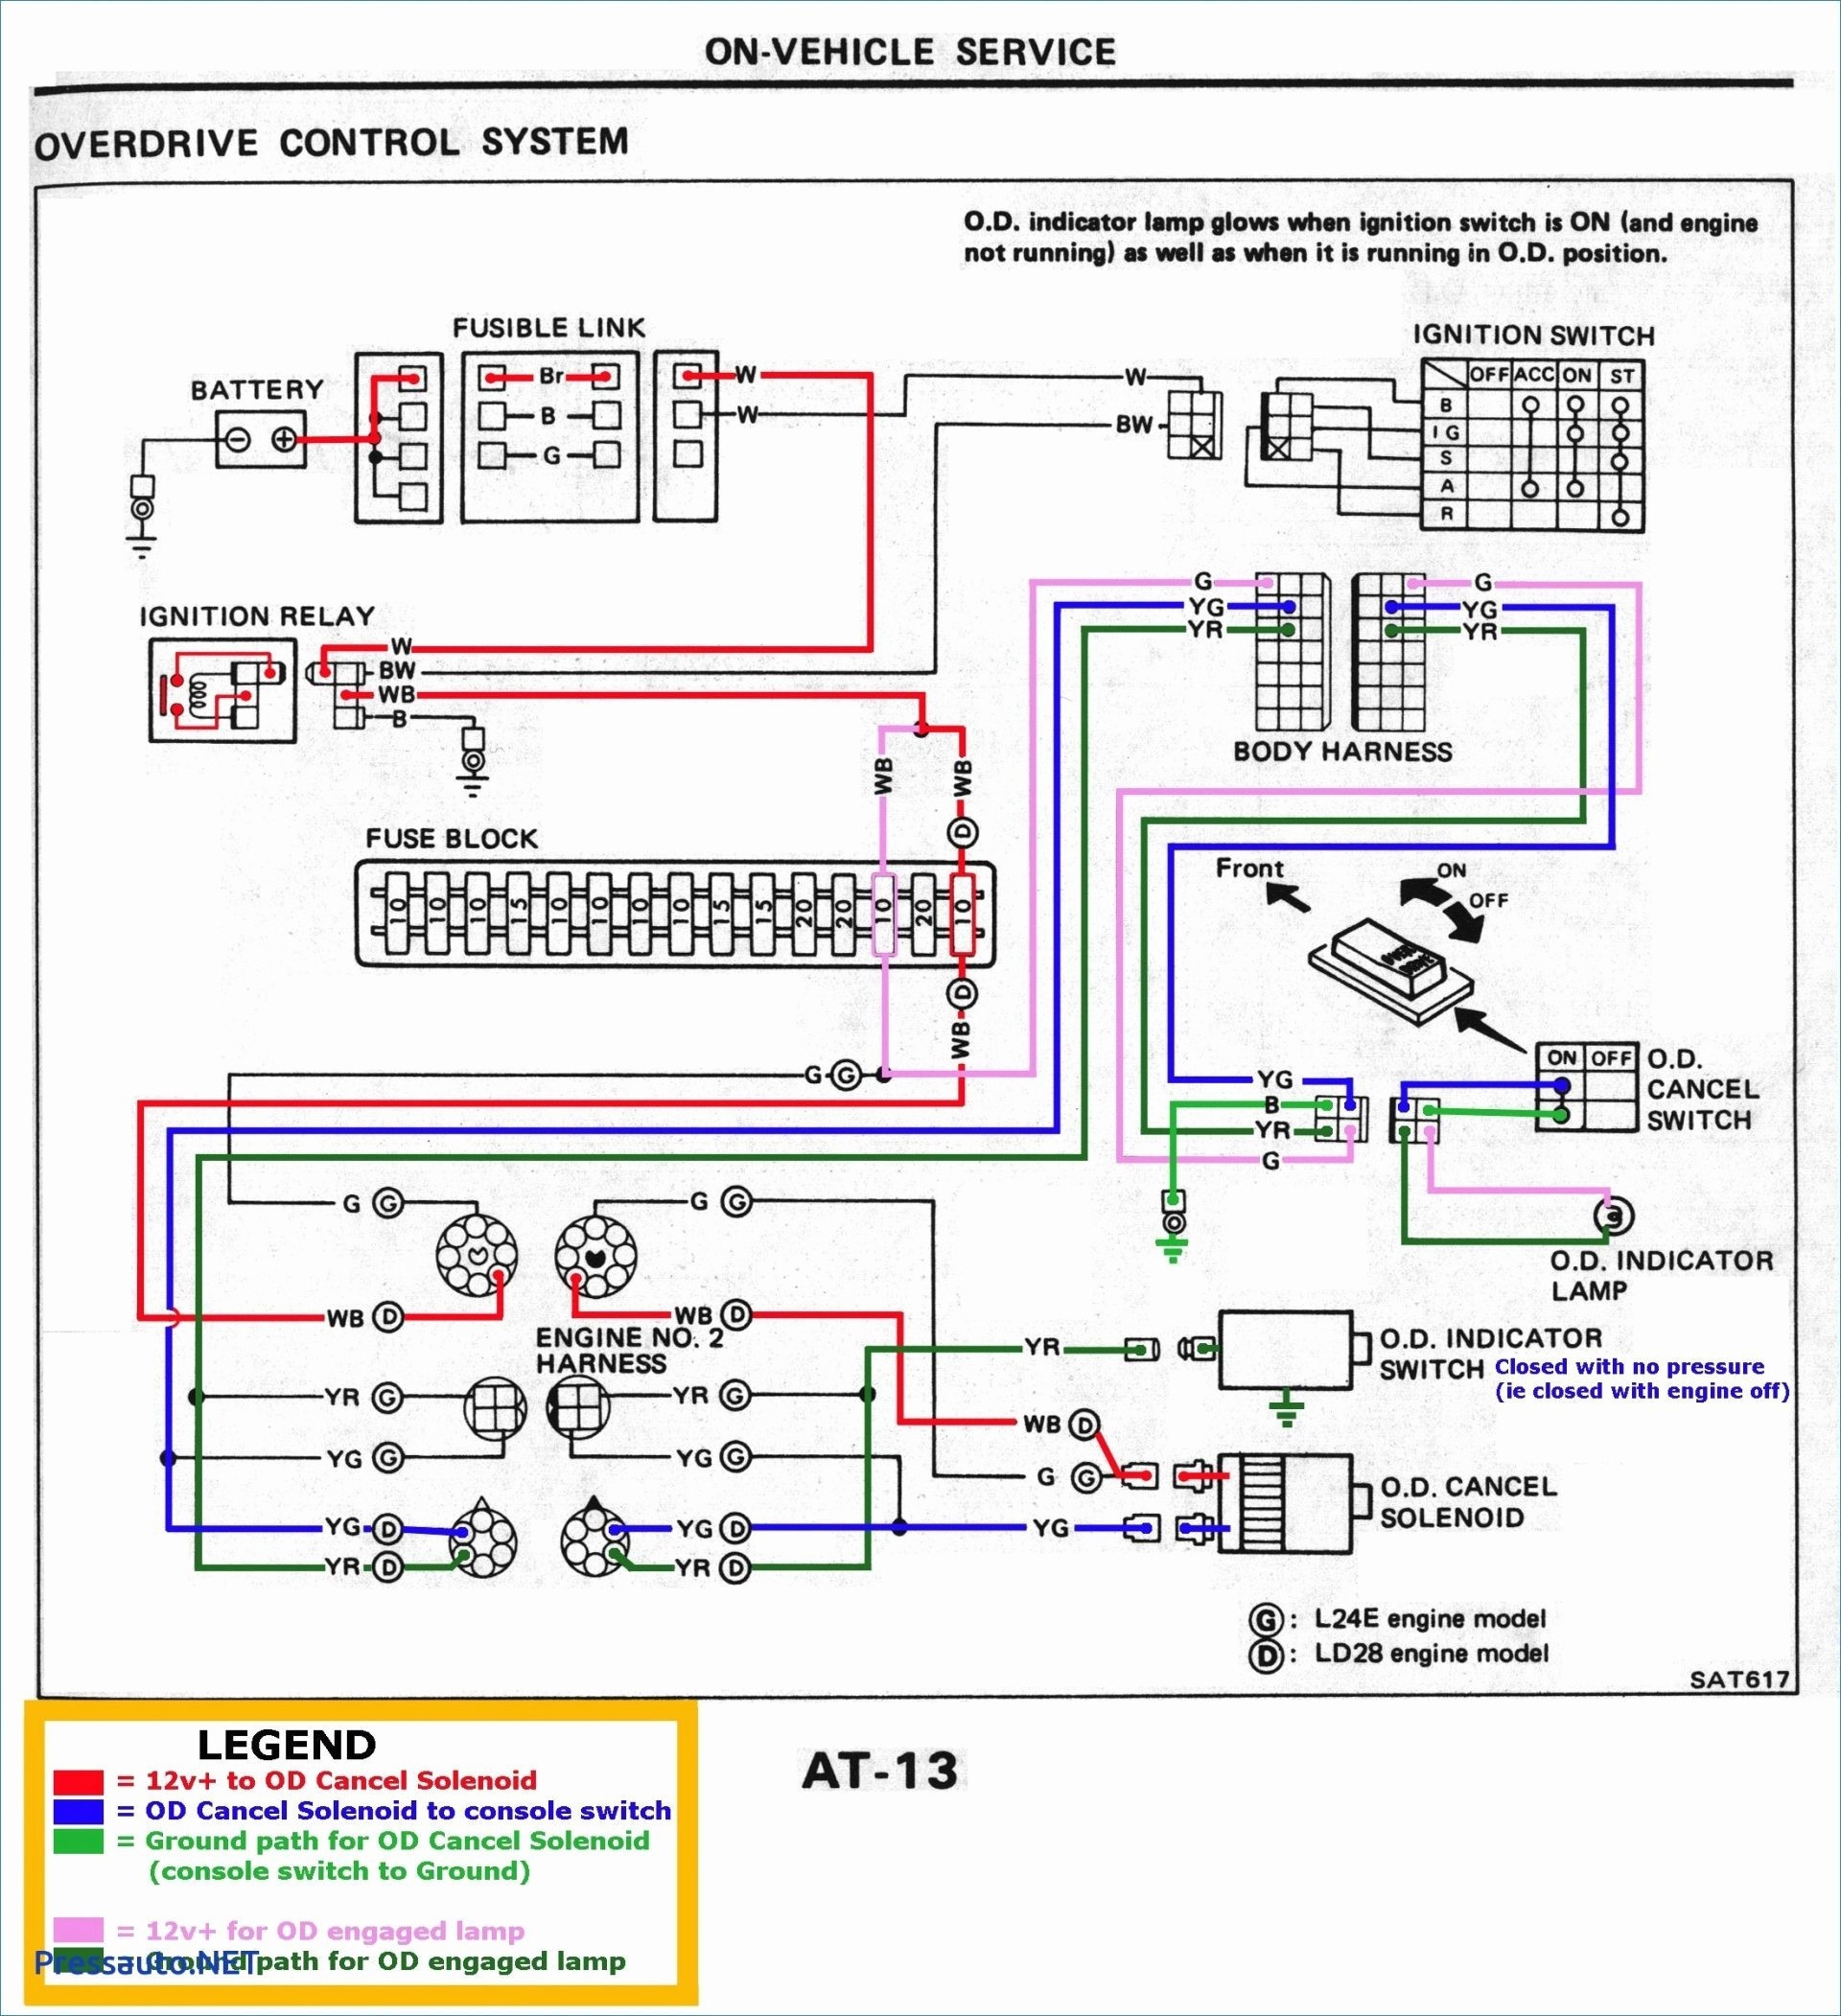 Obd0 Alternator Wiring Diagram Fresh Wiring Diagram for Alternator Conversion Valid Wiring Diagram Chevy